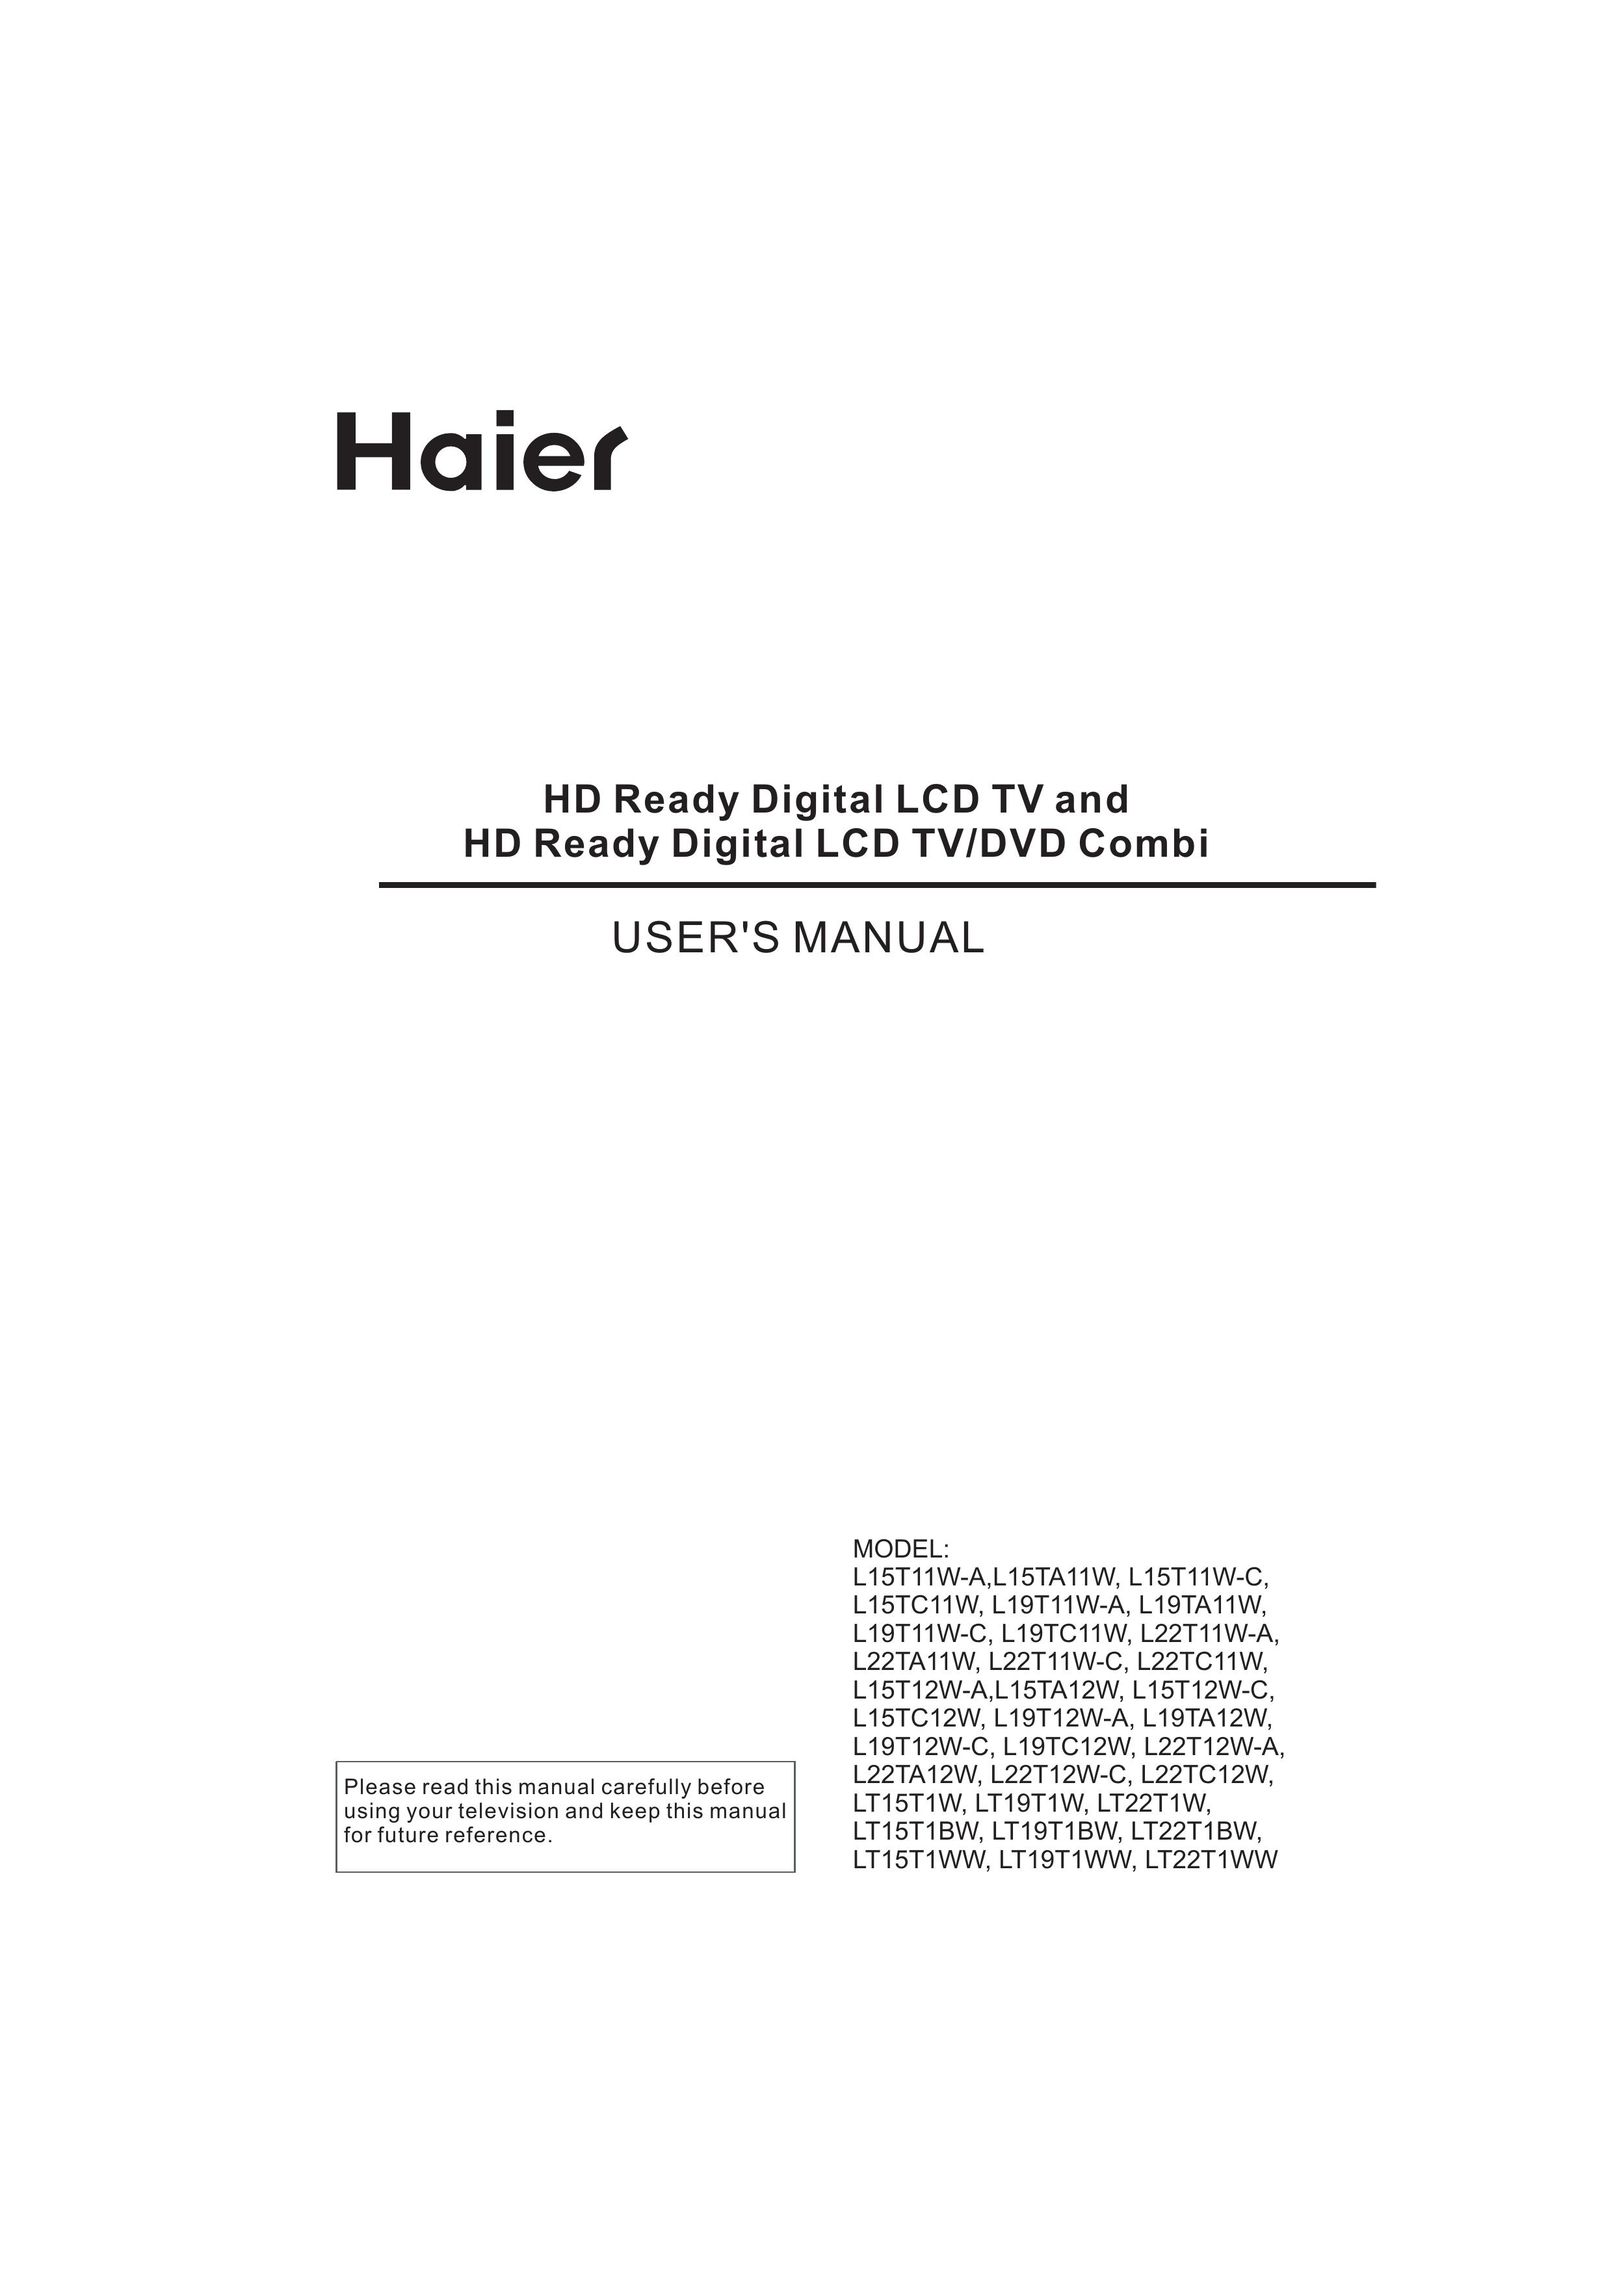 Haier L15T12W-C TV DVD Combo User Manual